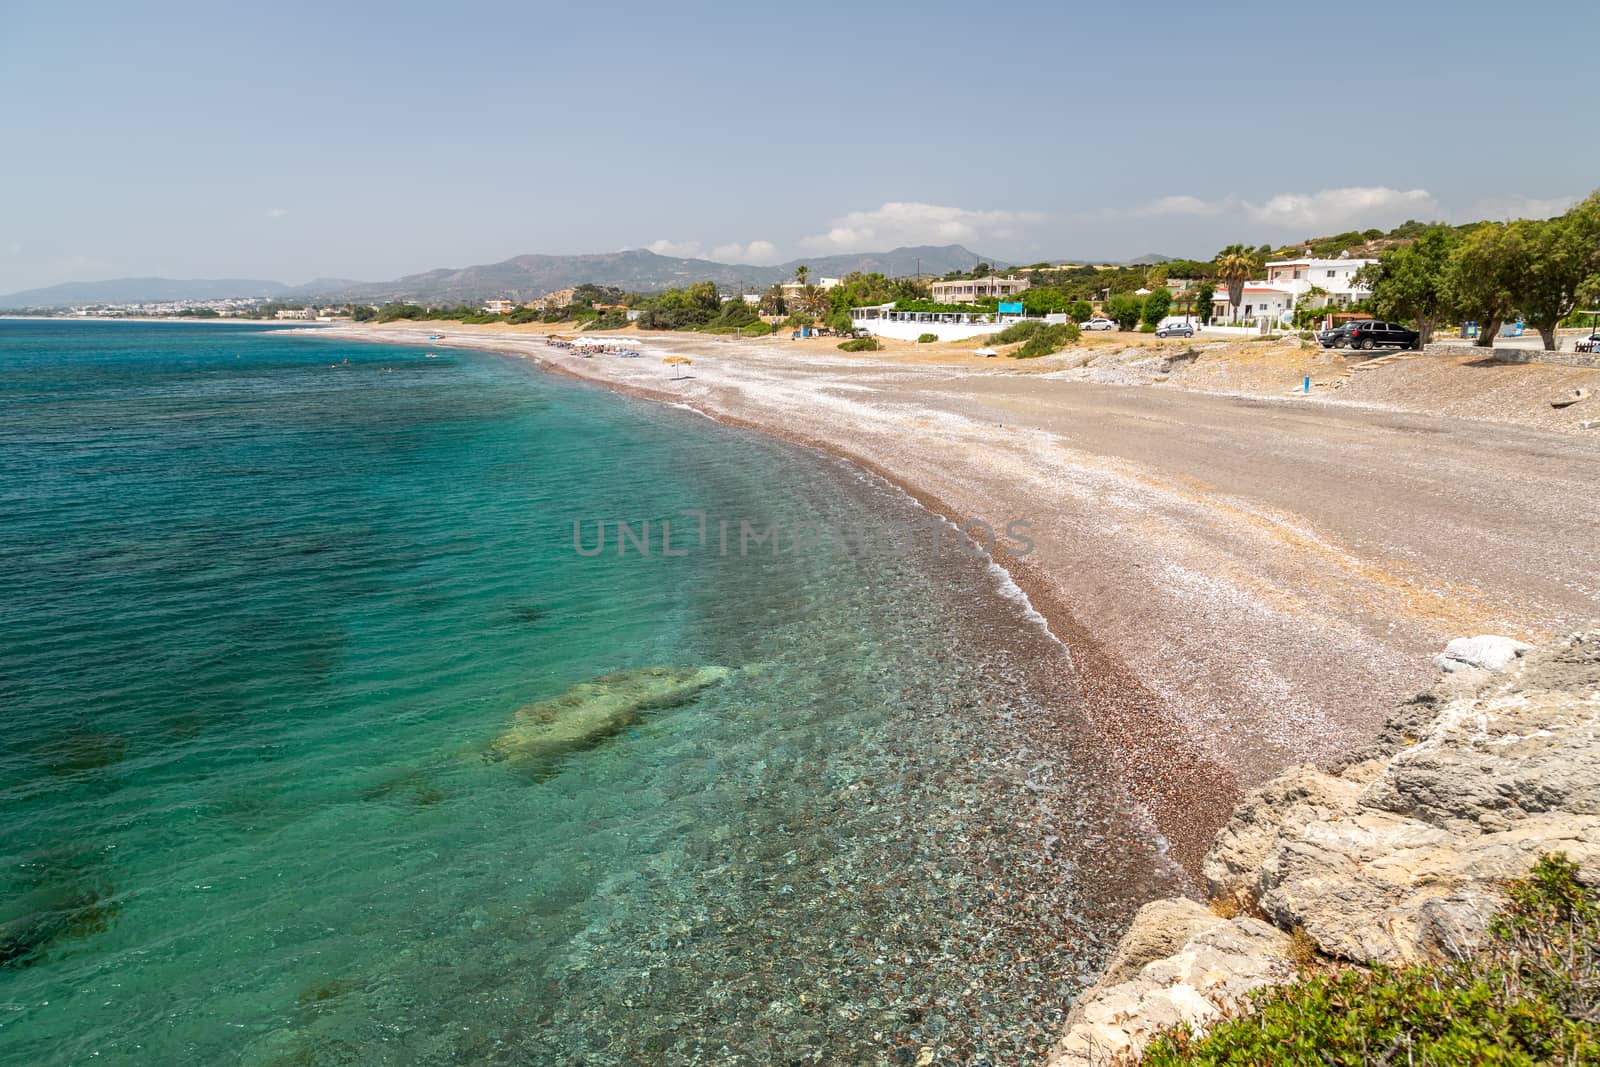 Gravel beach at Kiotari on Rhodes island, Greece by reinerc